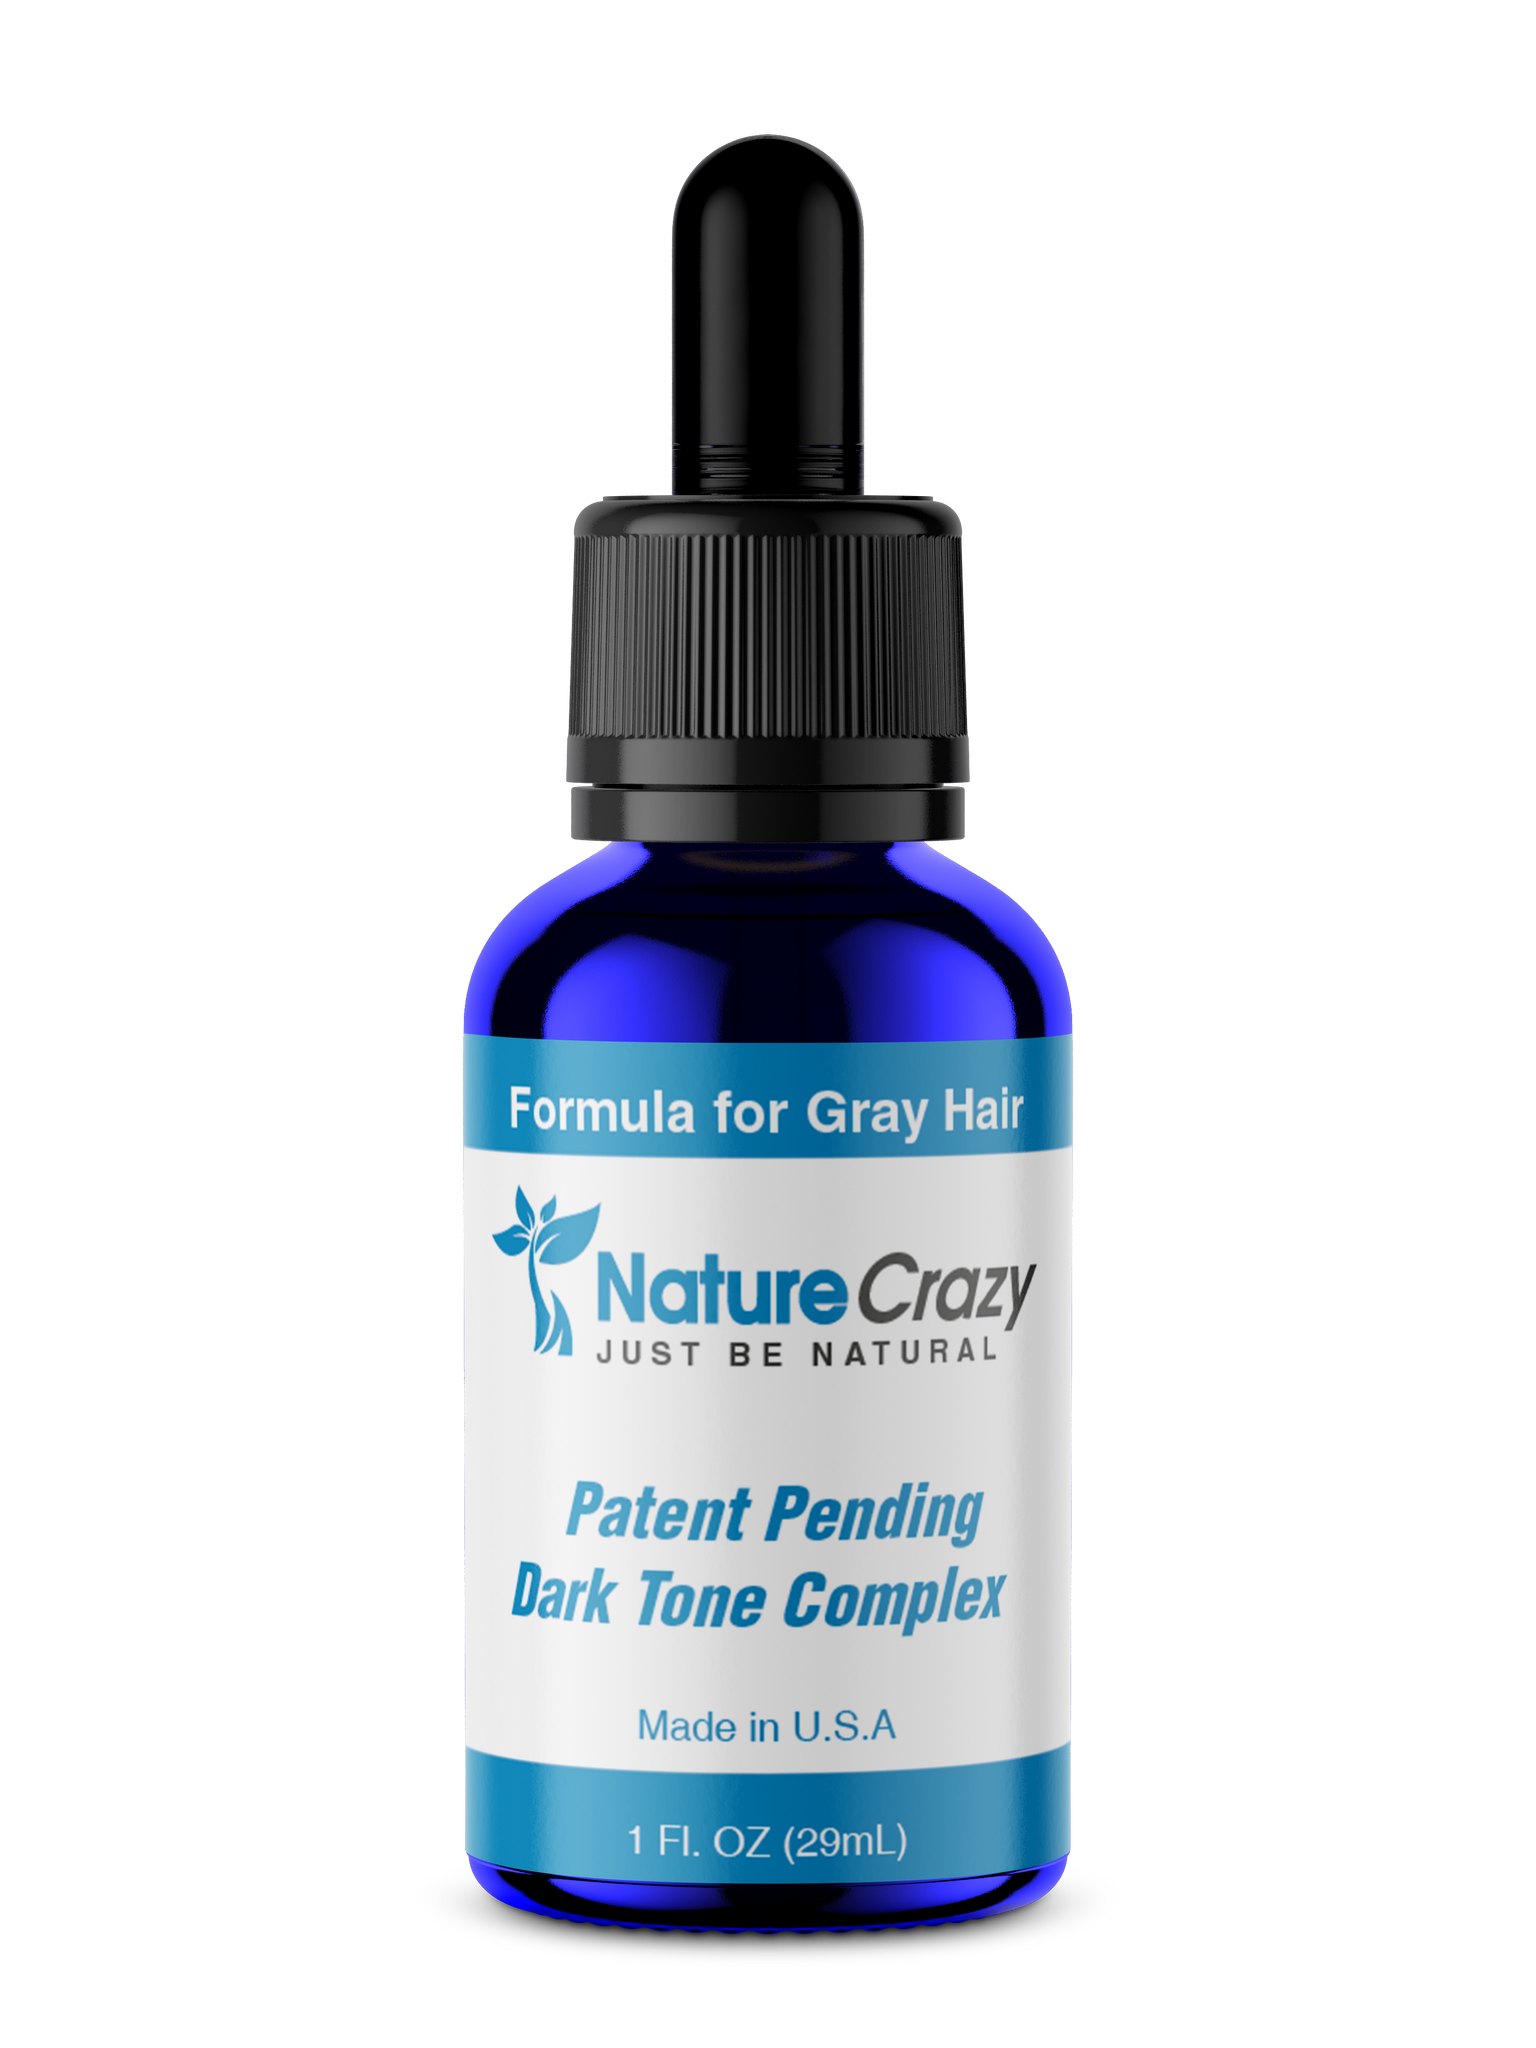 All Natural Hair Tone Restoration Tonic - Patent Pending Dark Tone Complex #62826877 - Nature Crazy LLC.